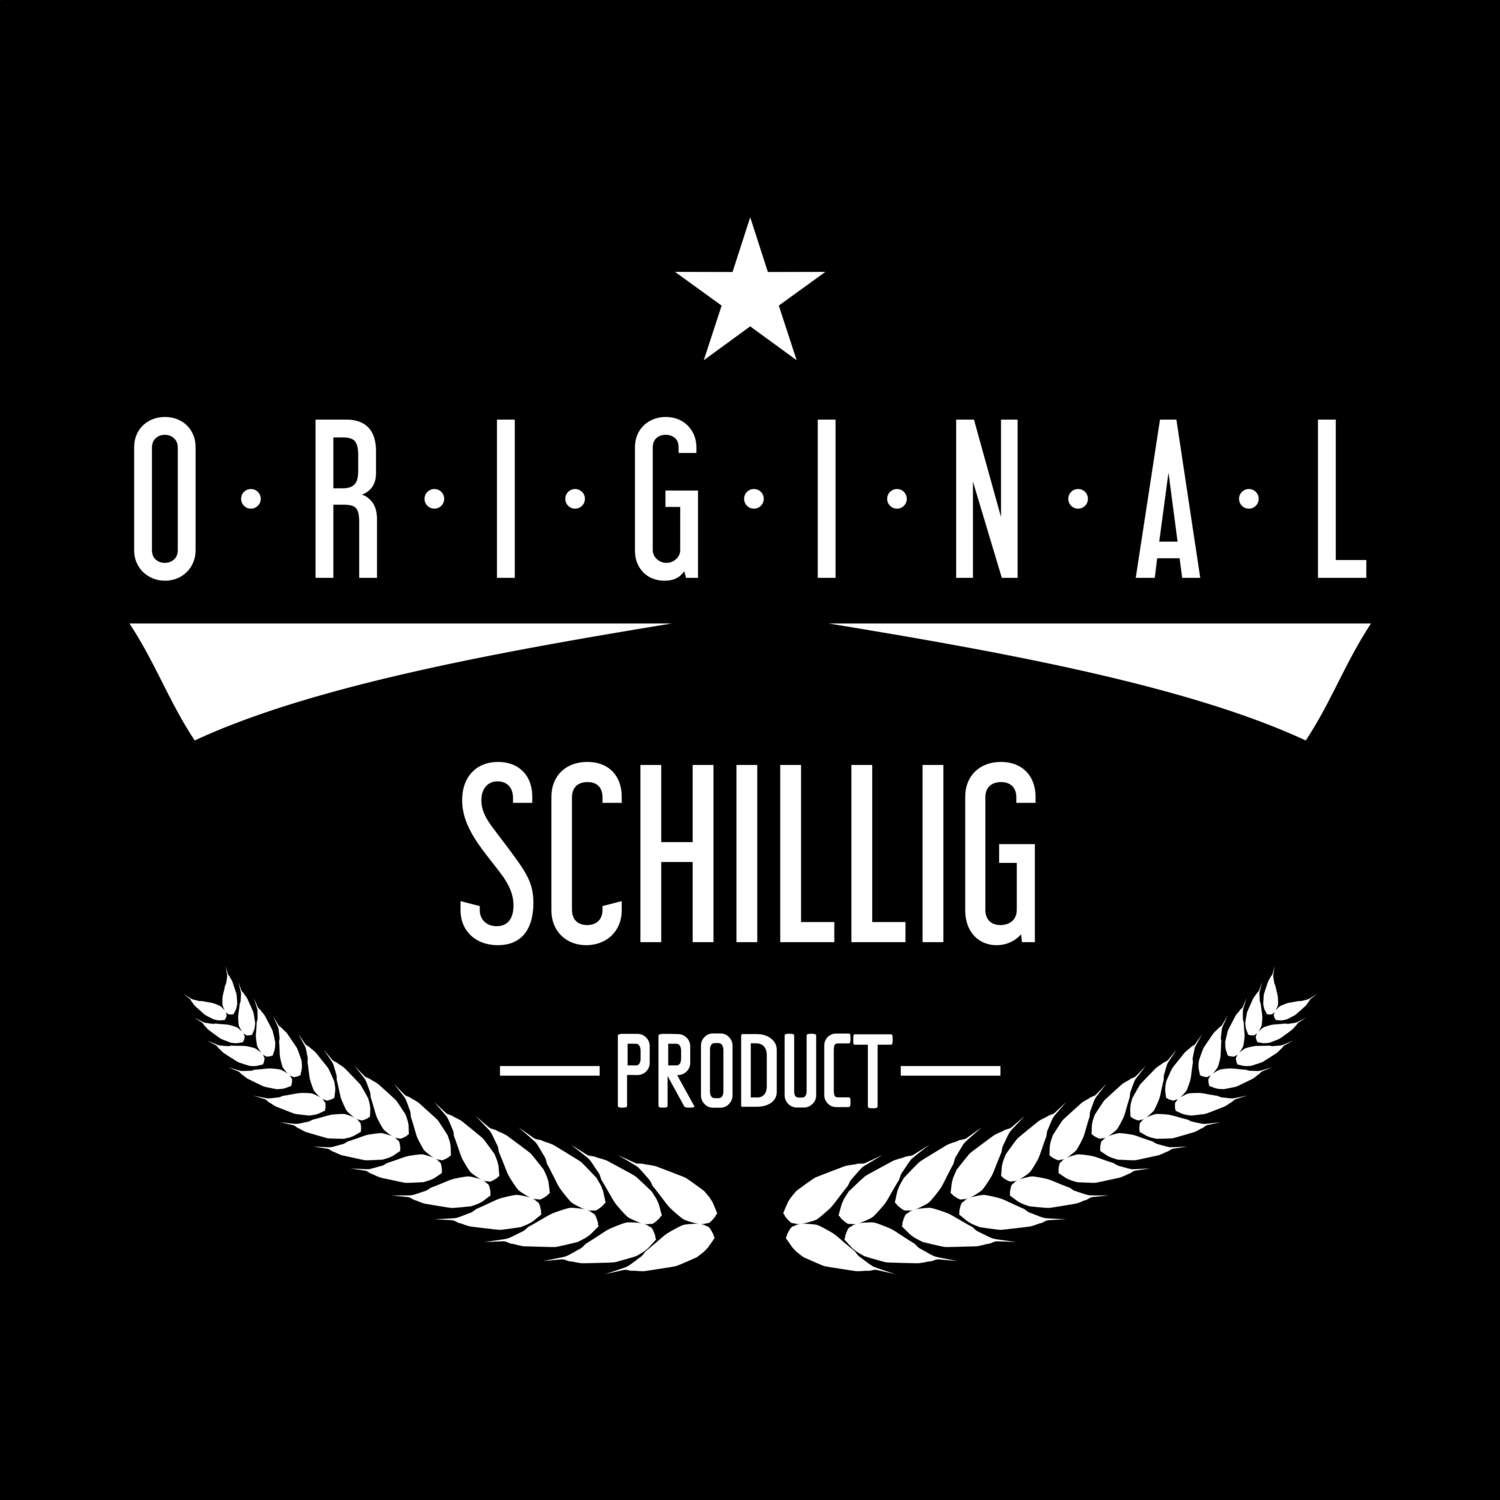 Schillig T-Shirt »Original Product«